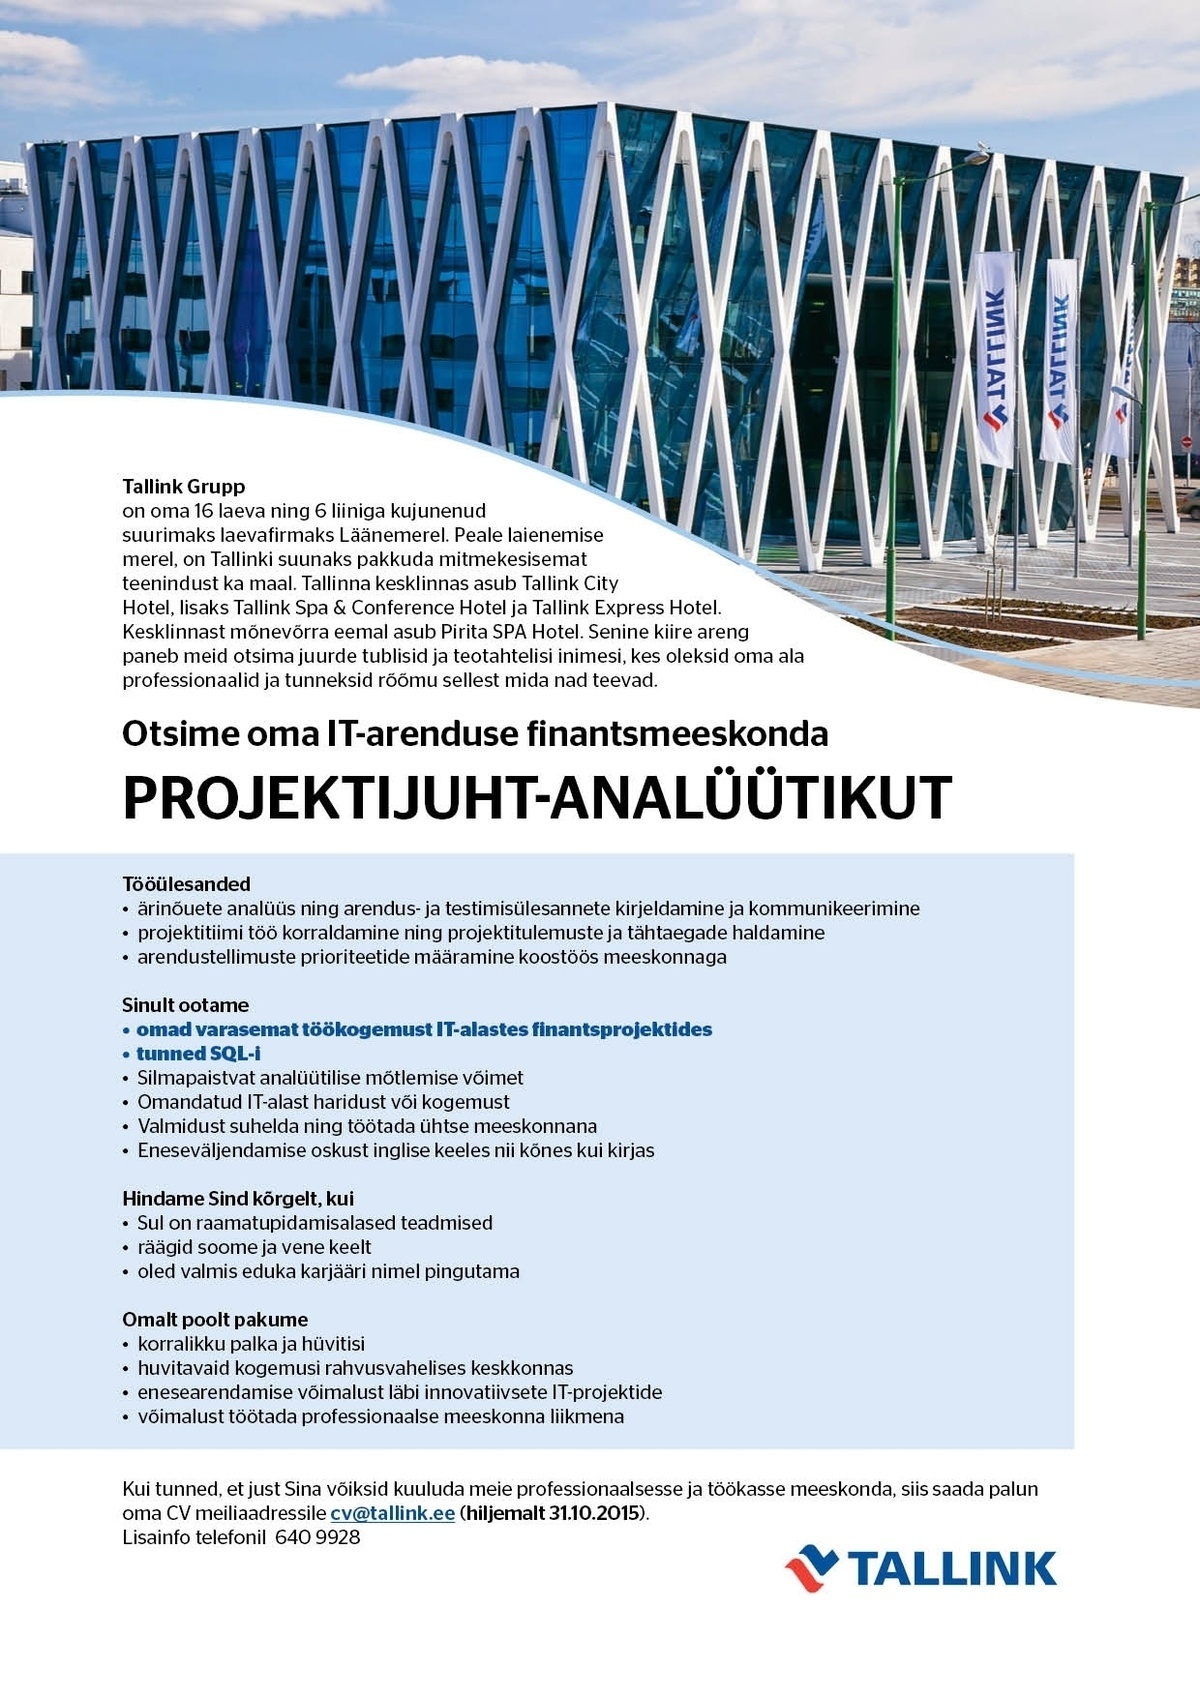 Tallink Grupp AS Projektijuht-analüütik